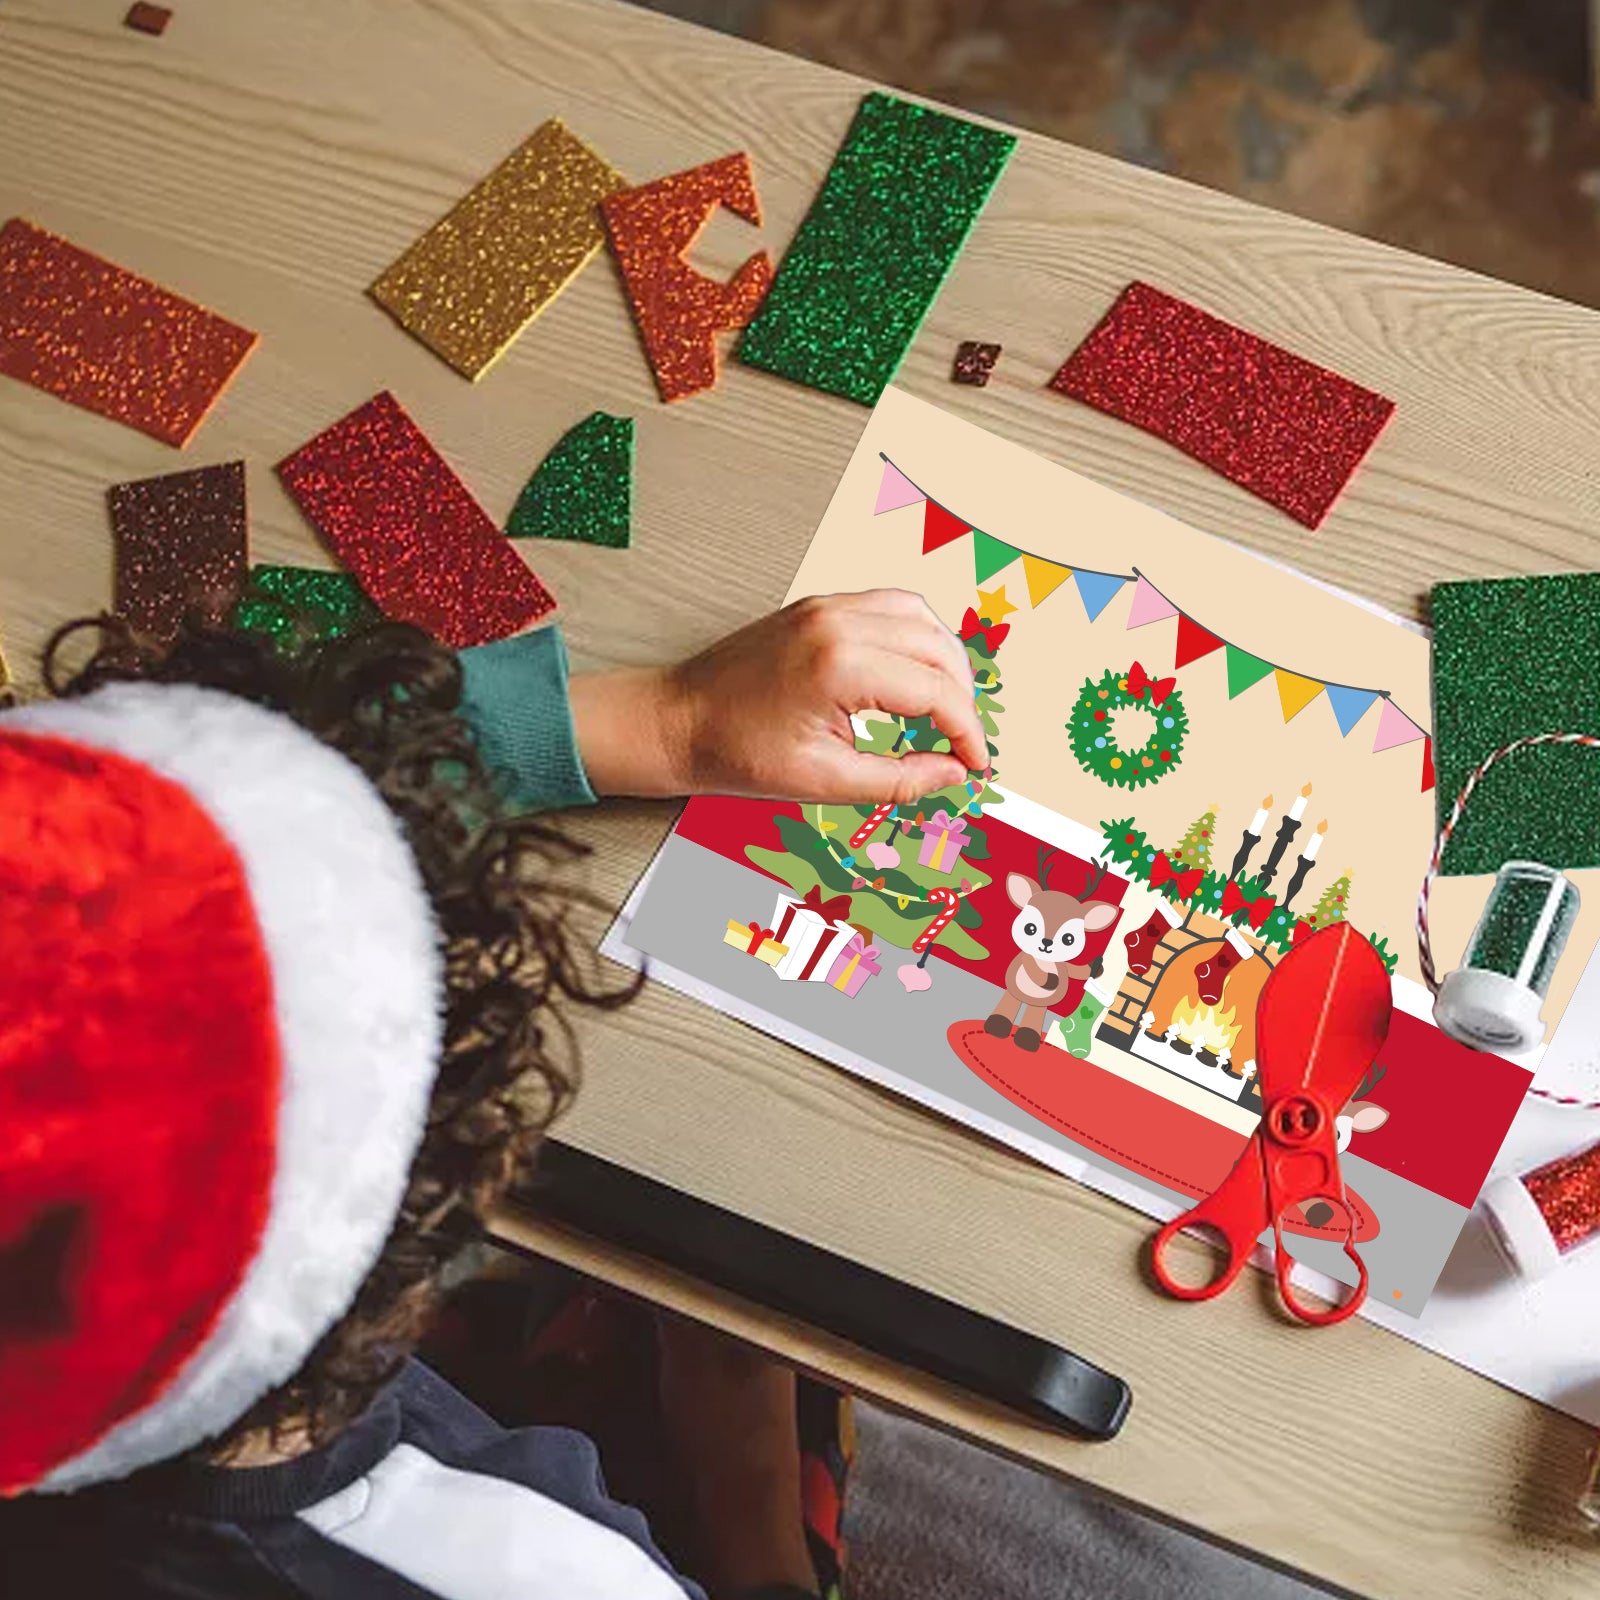 Globleland Christmas Fireplace Reindeer Carbon Steel Cutting Dies Stencils, for DIY Scrapbooking/Photo Album, Decorative Embossing DIY Paper Card